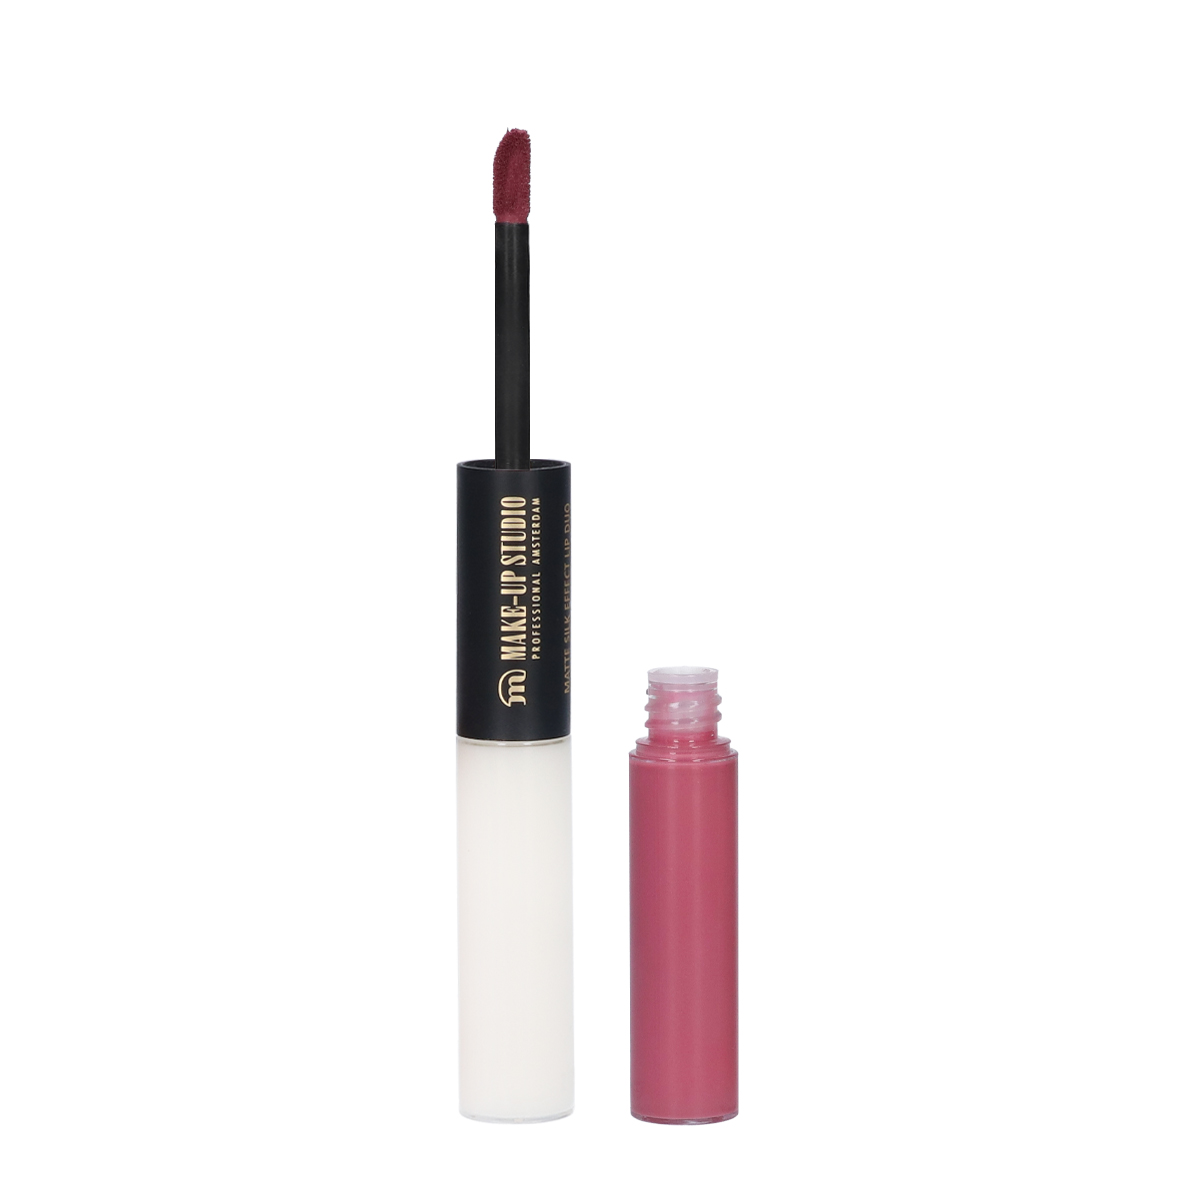 Make-up Studio Matte Silk Effect Lip Duo Lipstick - Cherry Blossom